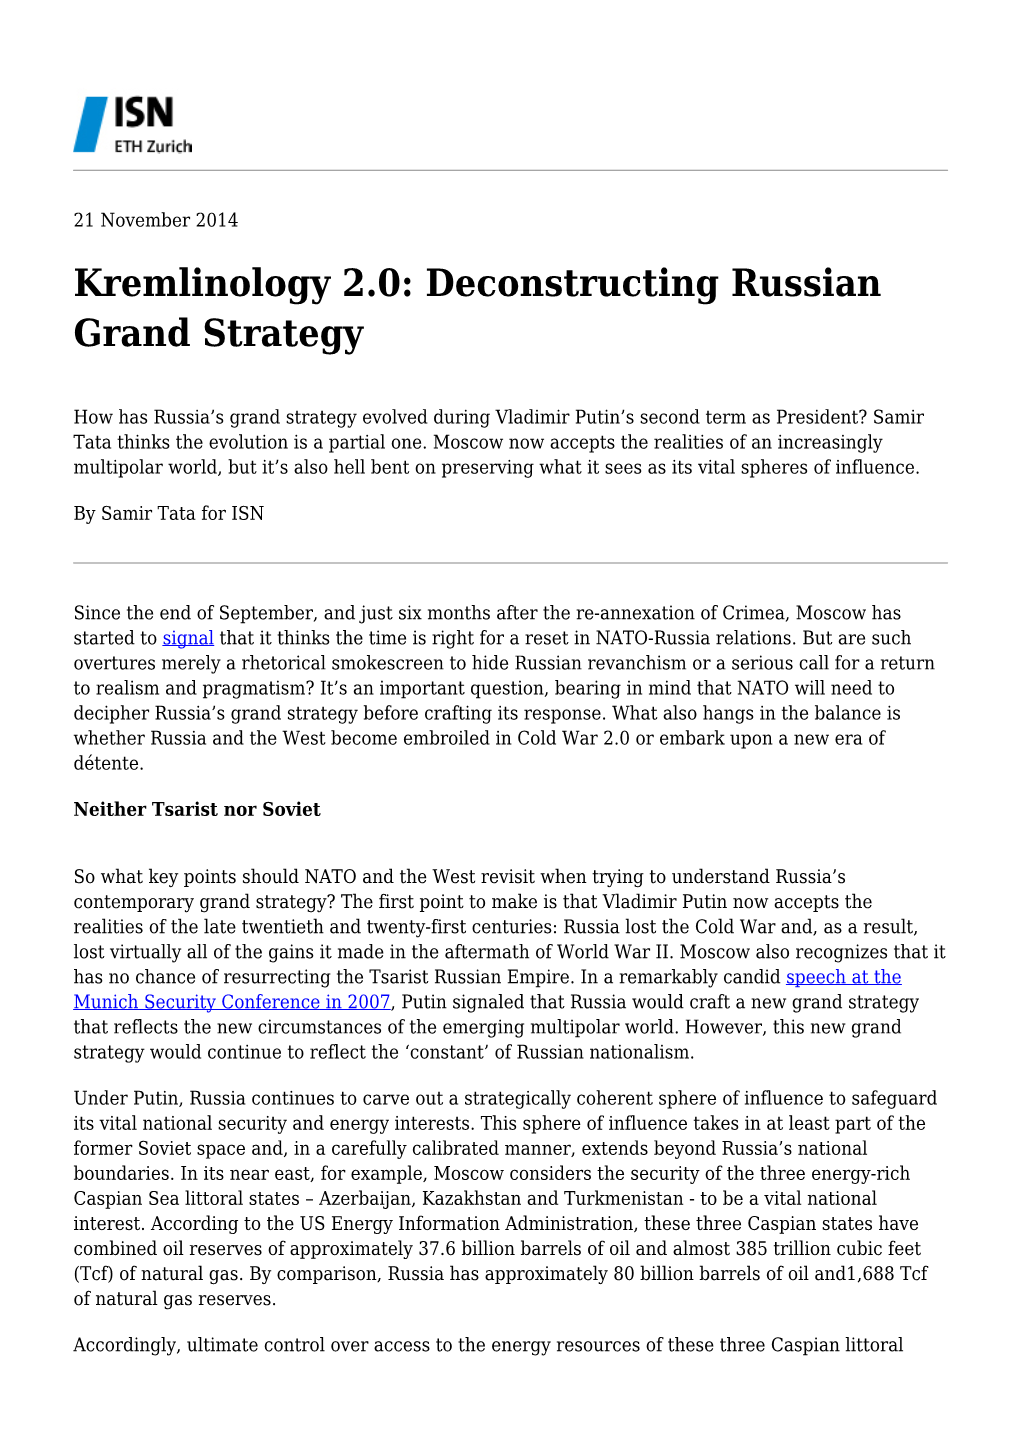 Kremlinology 2.0: Deconstructing Russian Grand Strategy